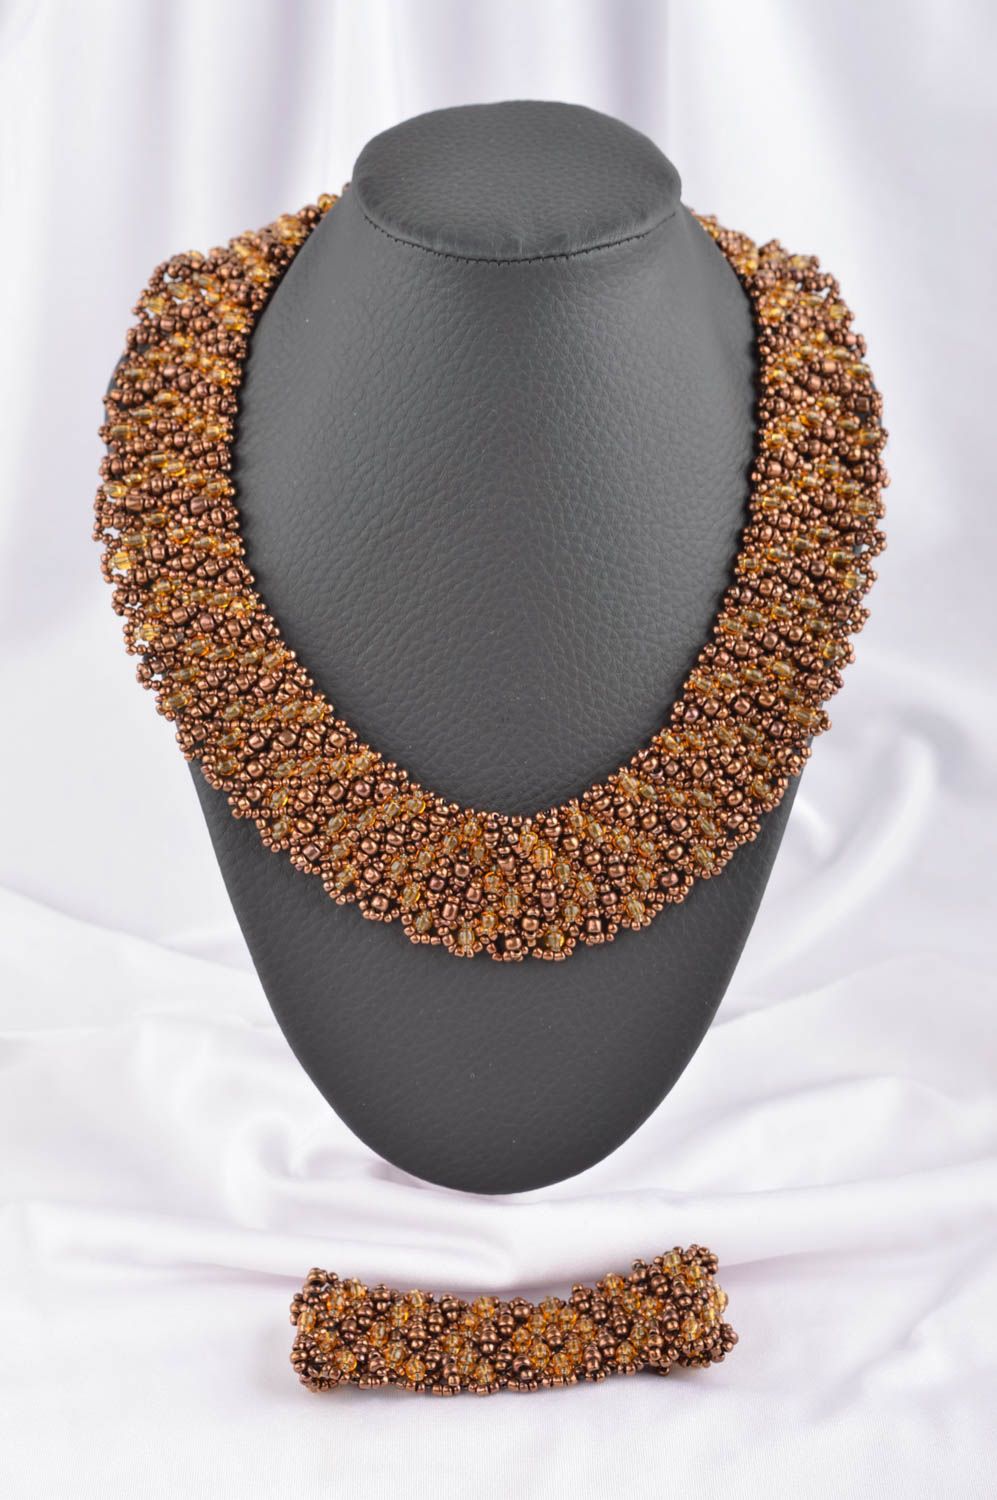 Handmade beaded necklace wrist bracelet designs costume jewelry set ideas photo 1